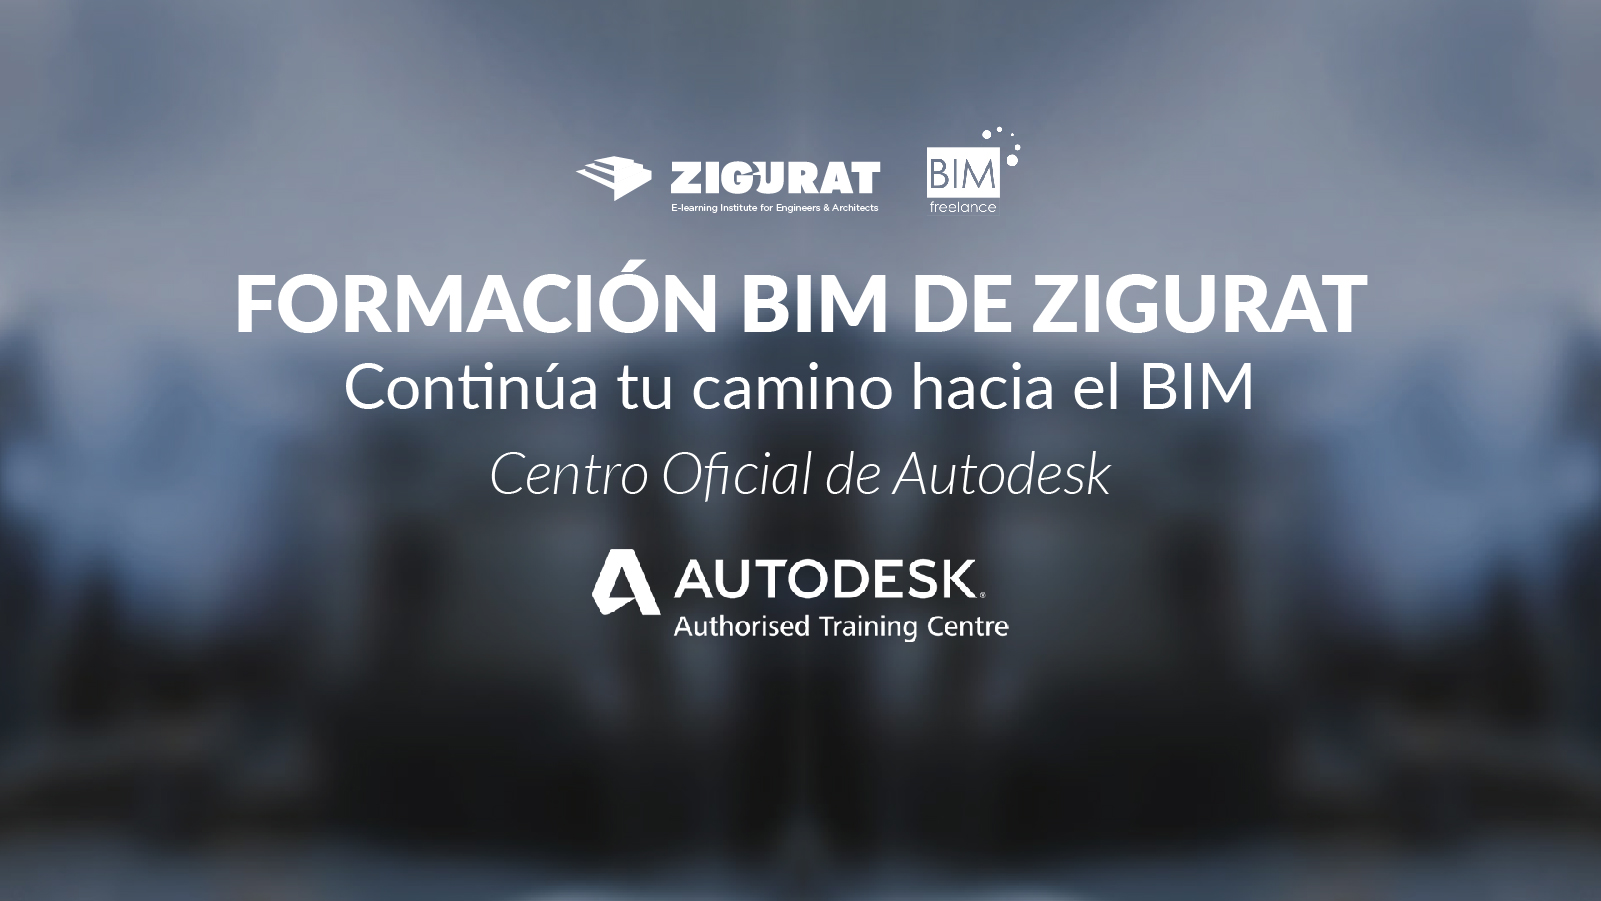 bim-freelance-autodesk-zigurat-elearning